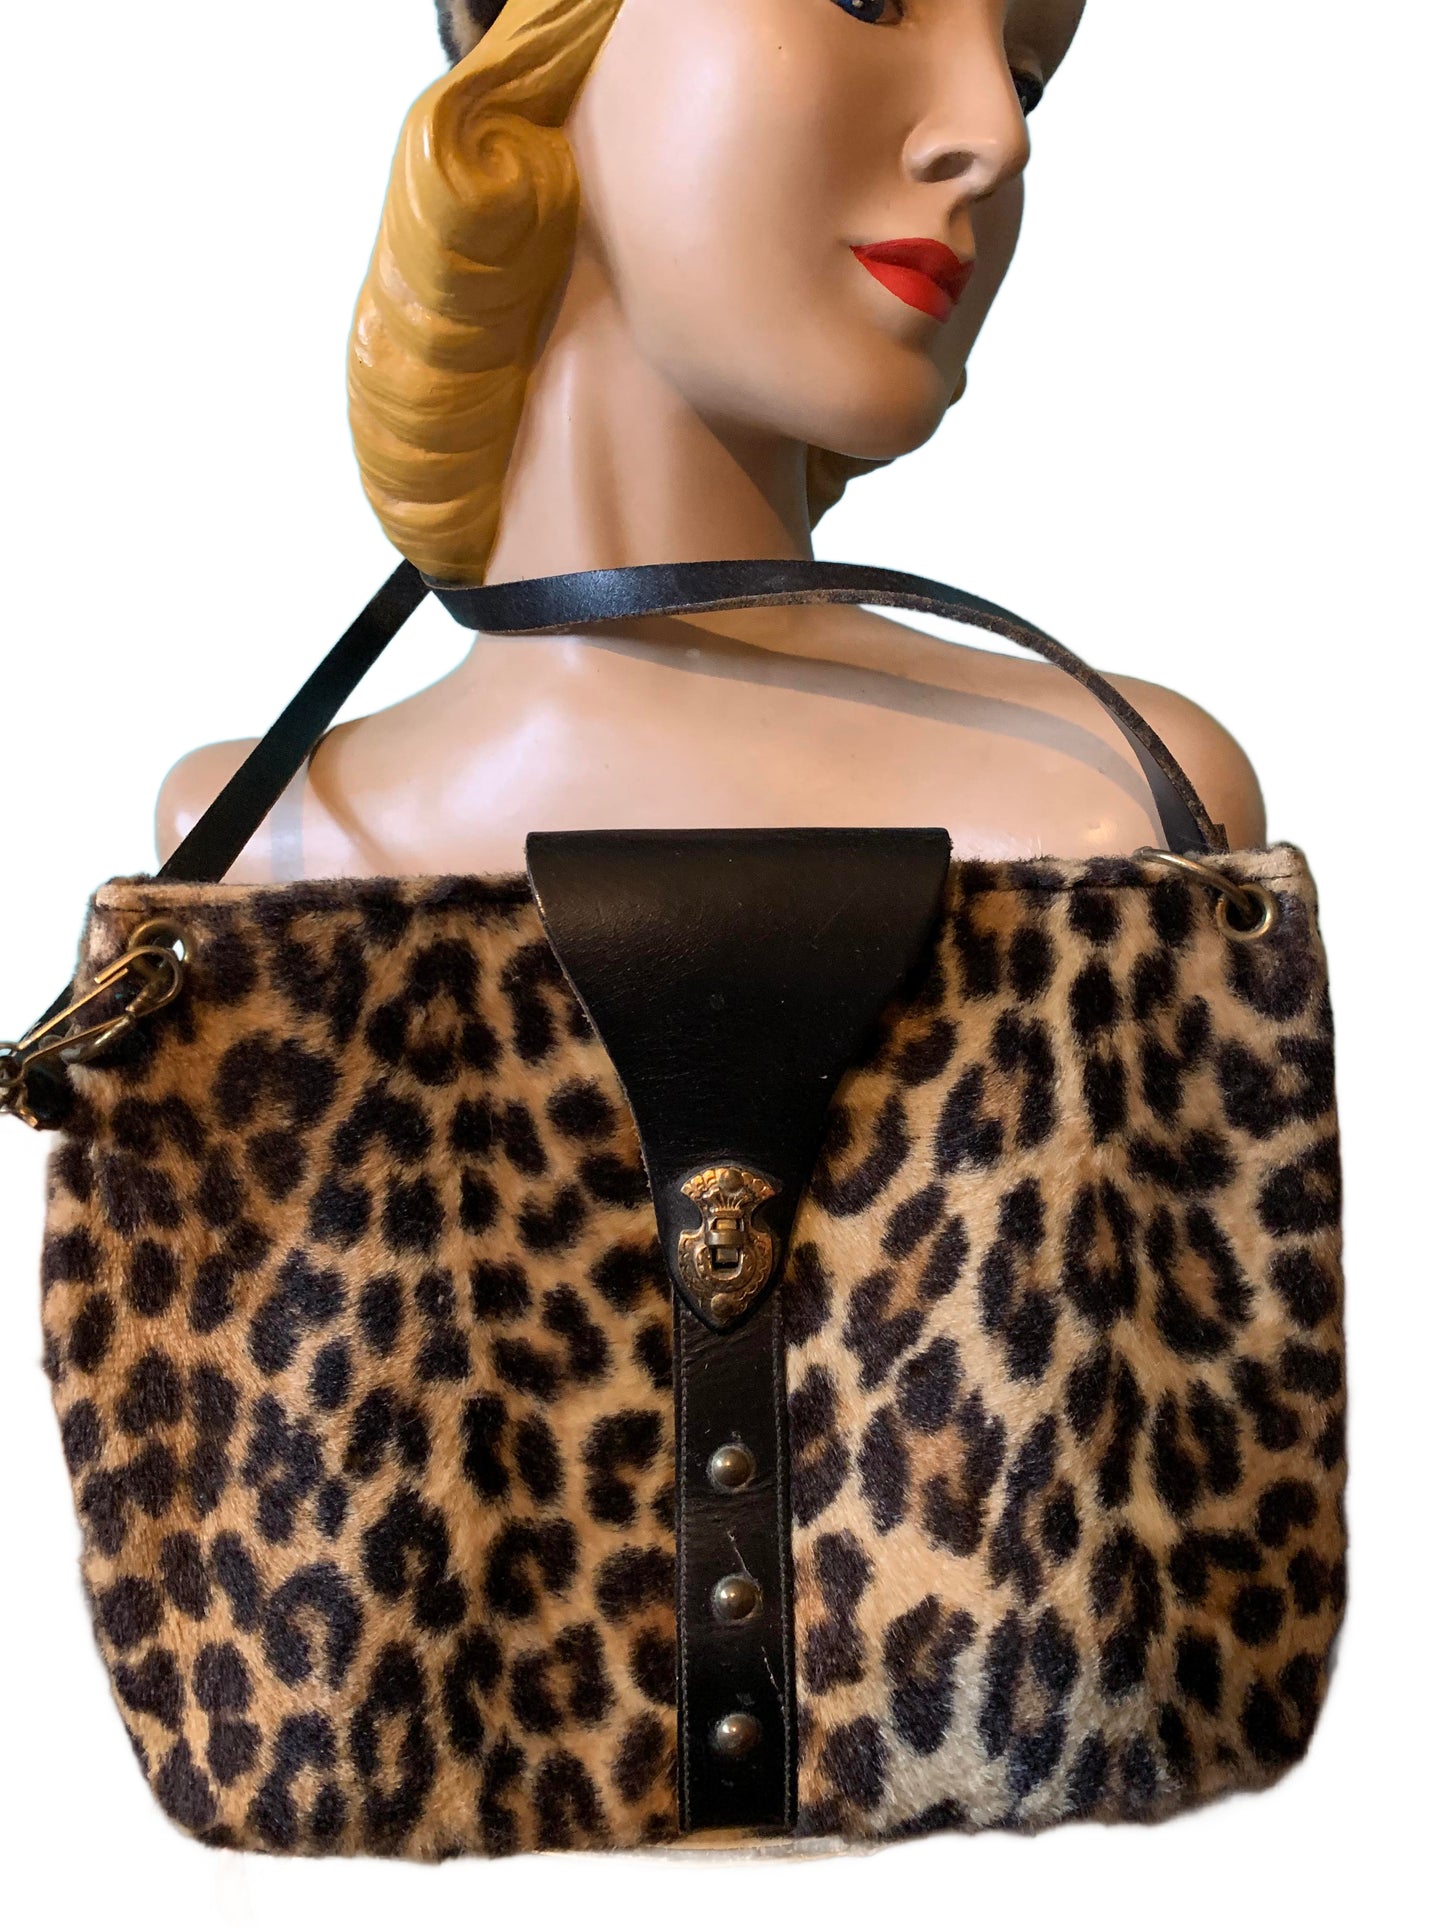 Faux Leopard Print Tall Pillbox Hat and Handbag circa 1960s